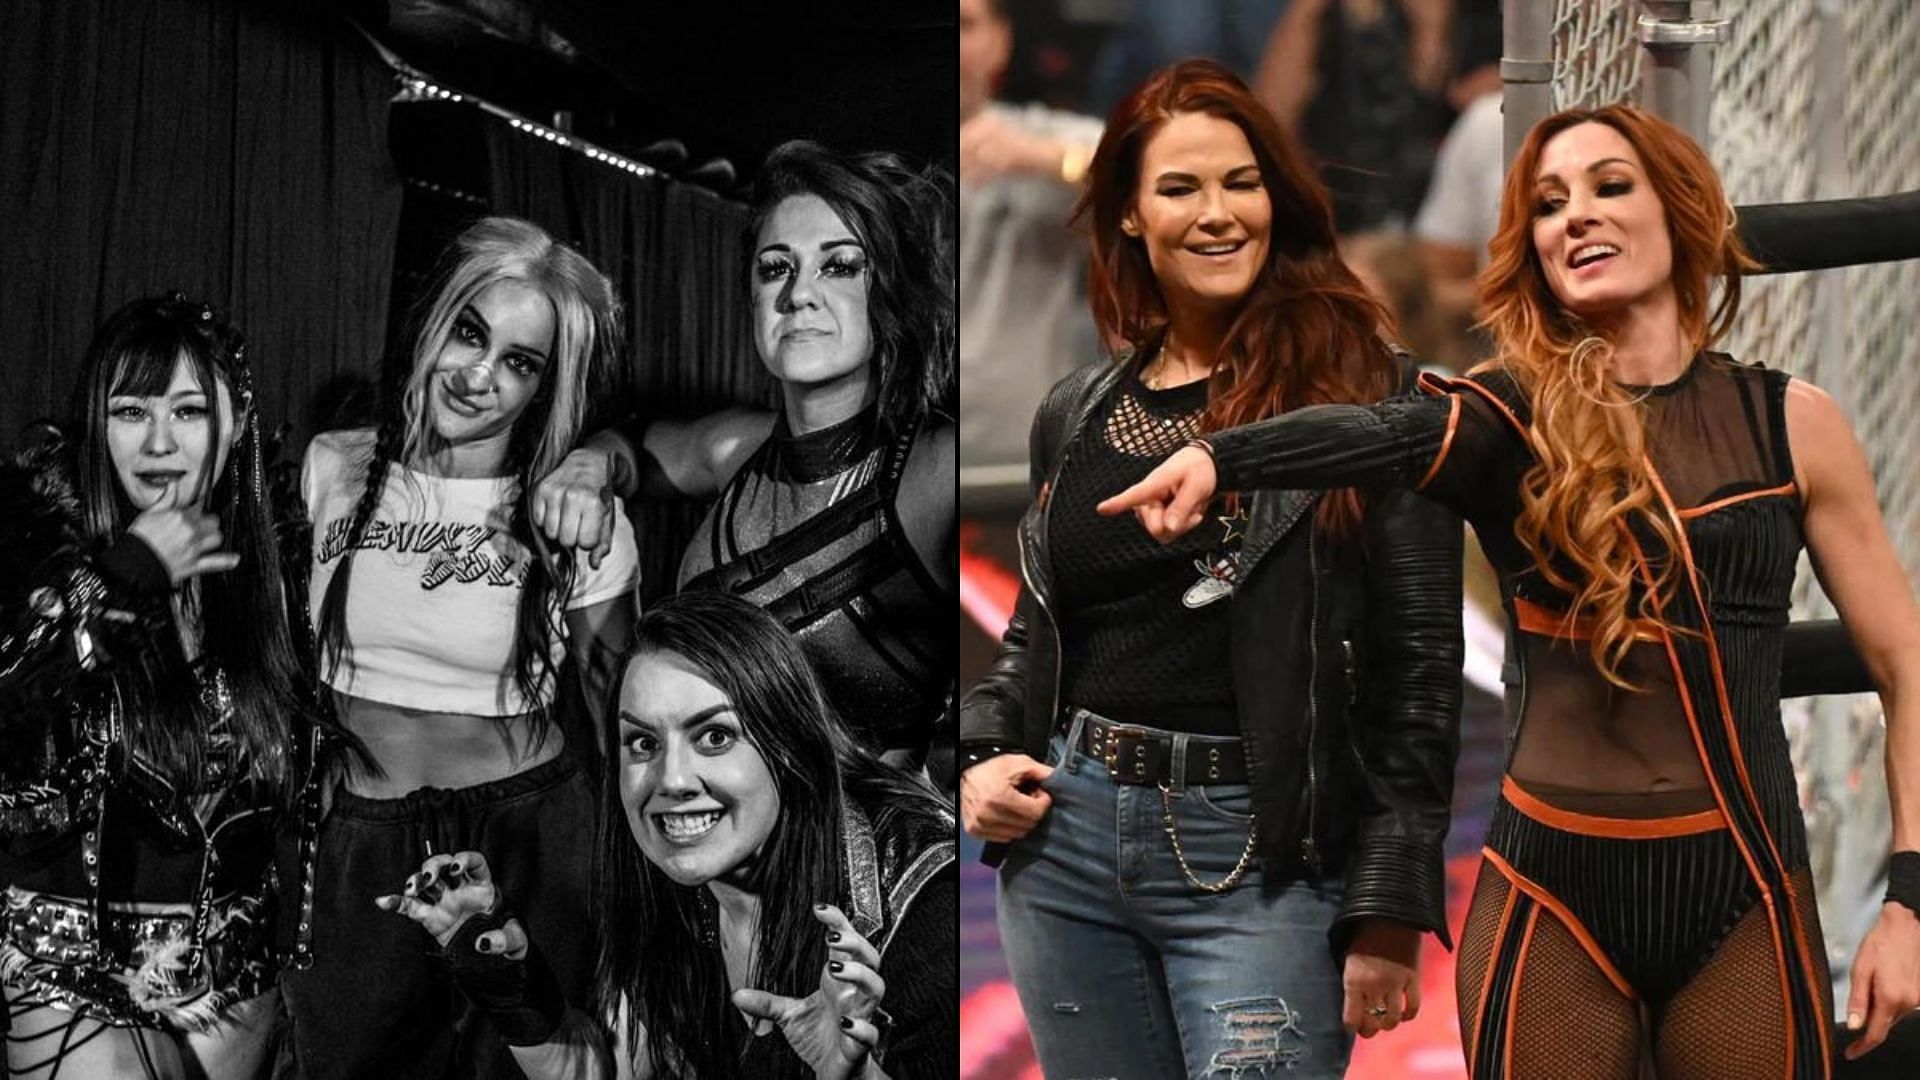 Damage CTRL, Nikki Cross, WWE Hall of Famer Lita and Becky Lynch. Courtesy: WWE.com